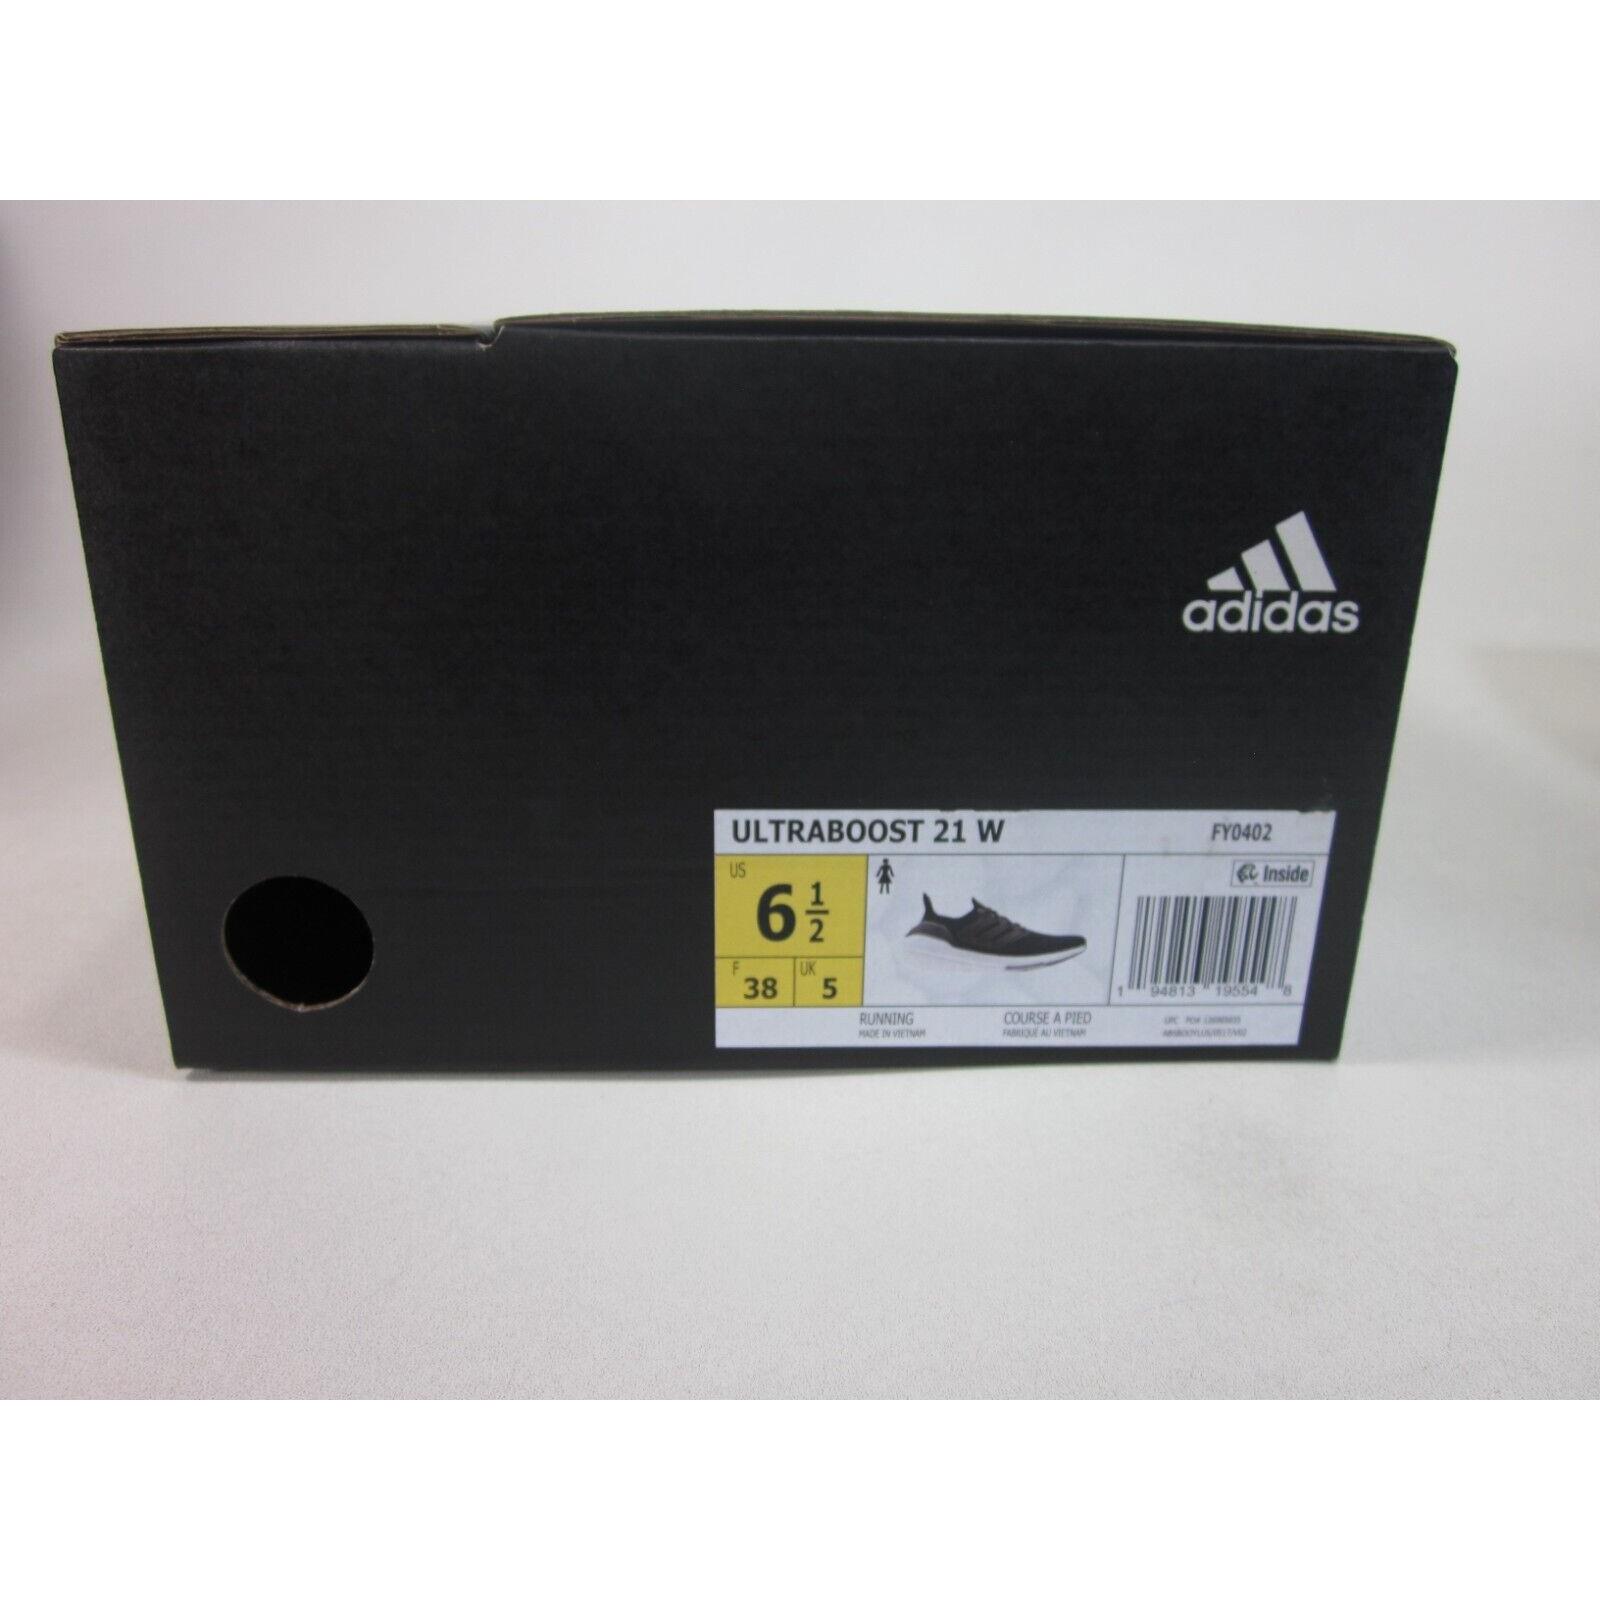 Adidas shoes Ultraboost - Black/Grey/White 6